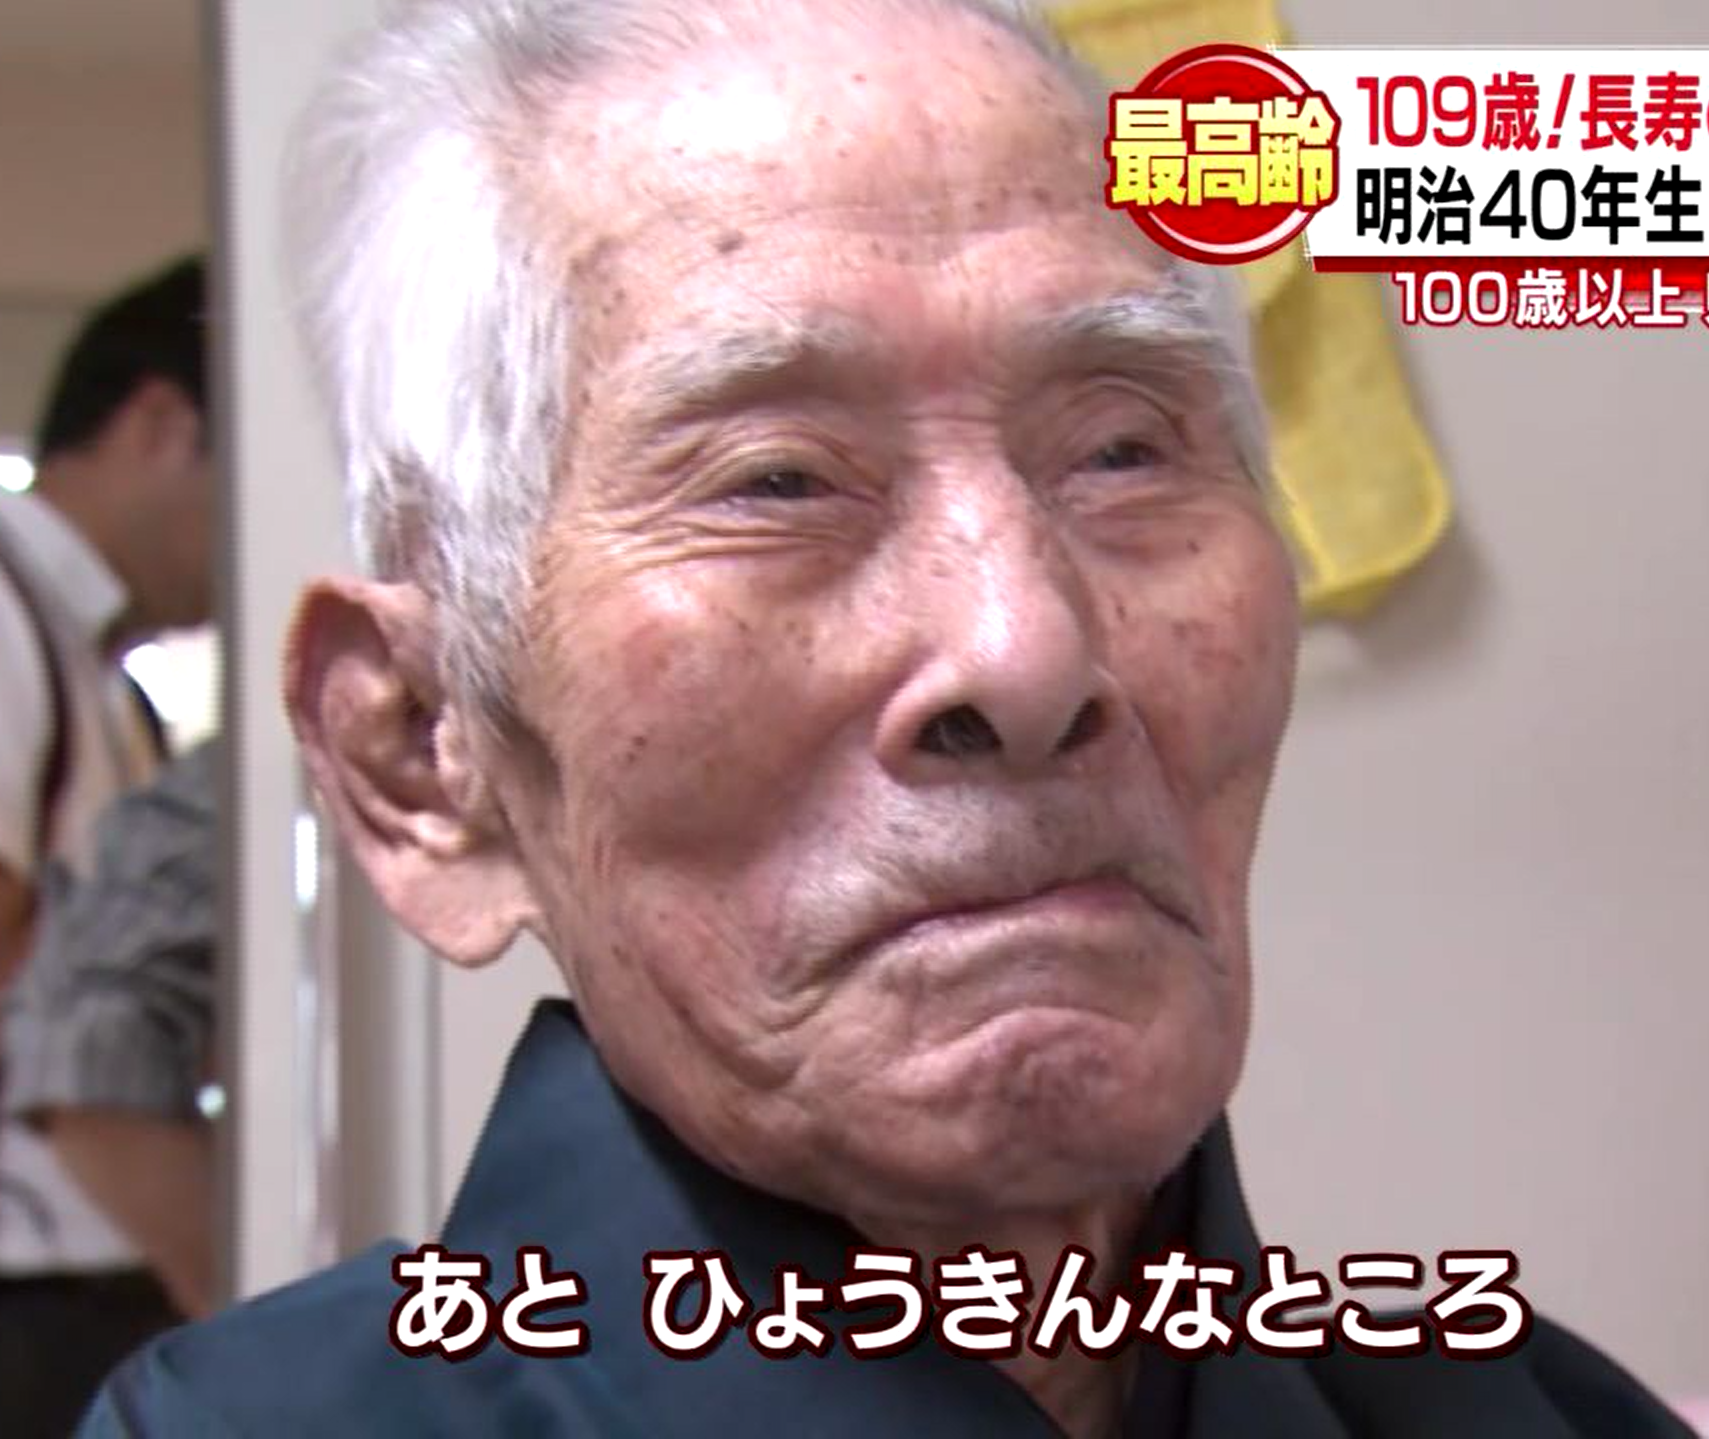 In September 2016, aged 109. (Source: Nagasaki Culture Telecasting)